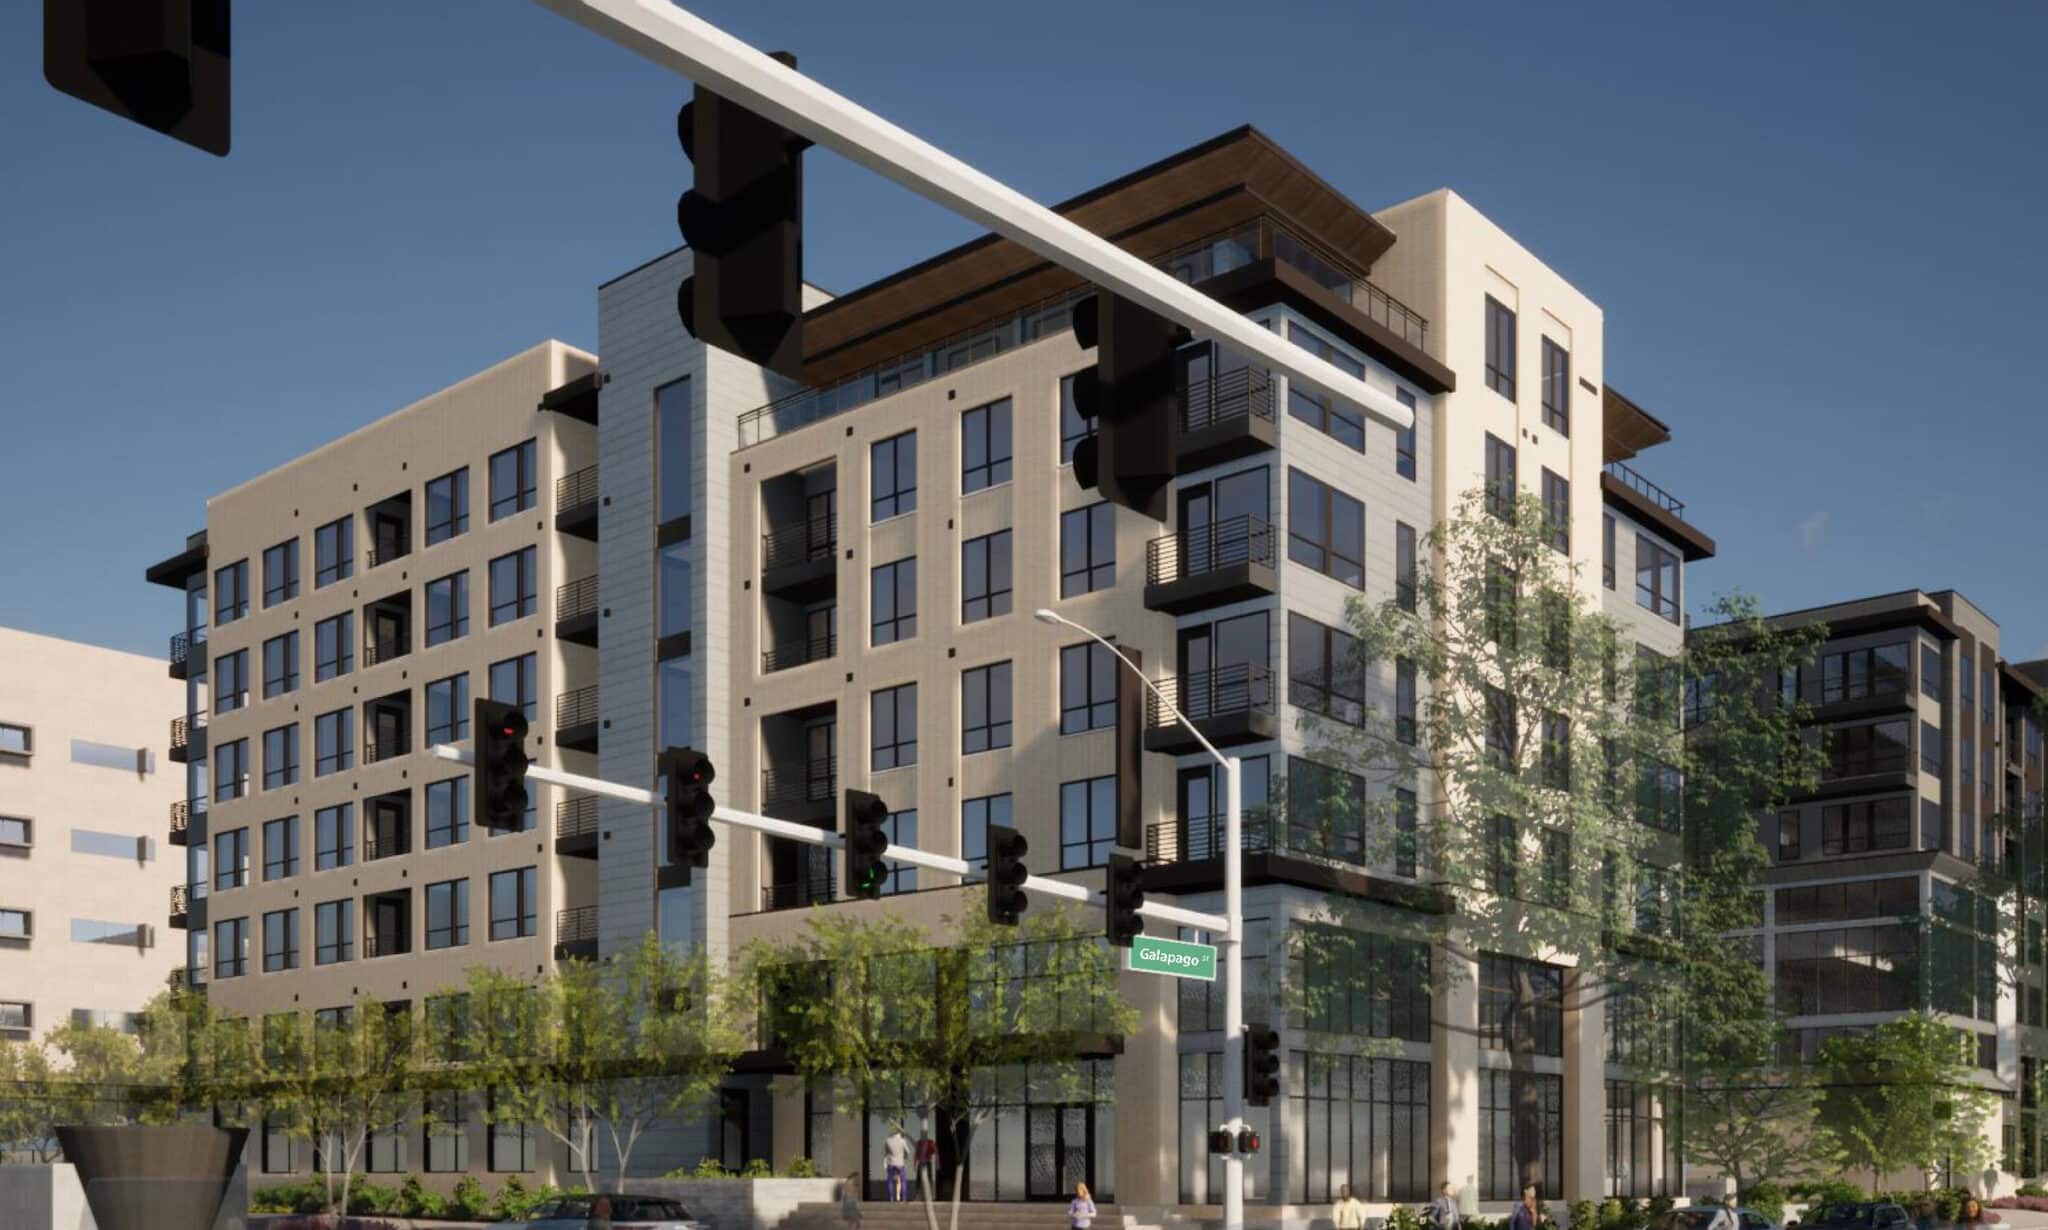 Golden Triangle site sold to apartment complex developer